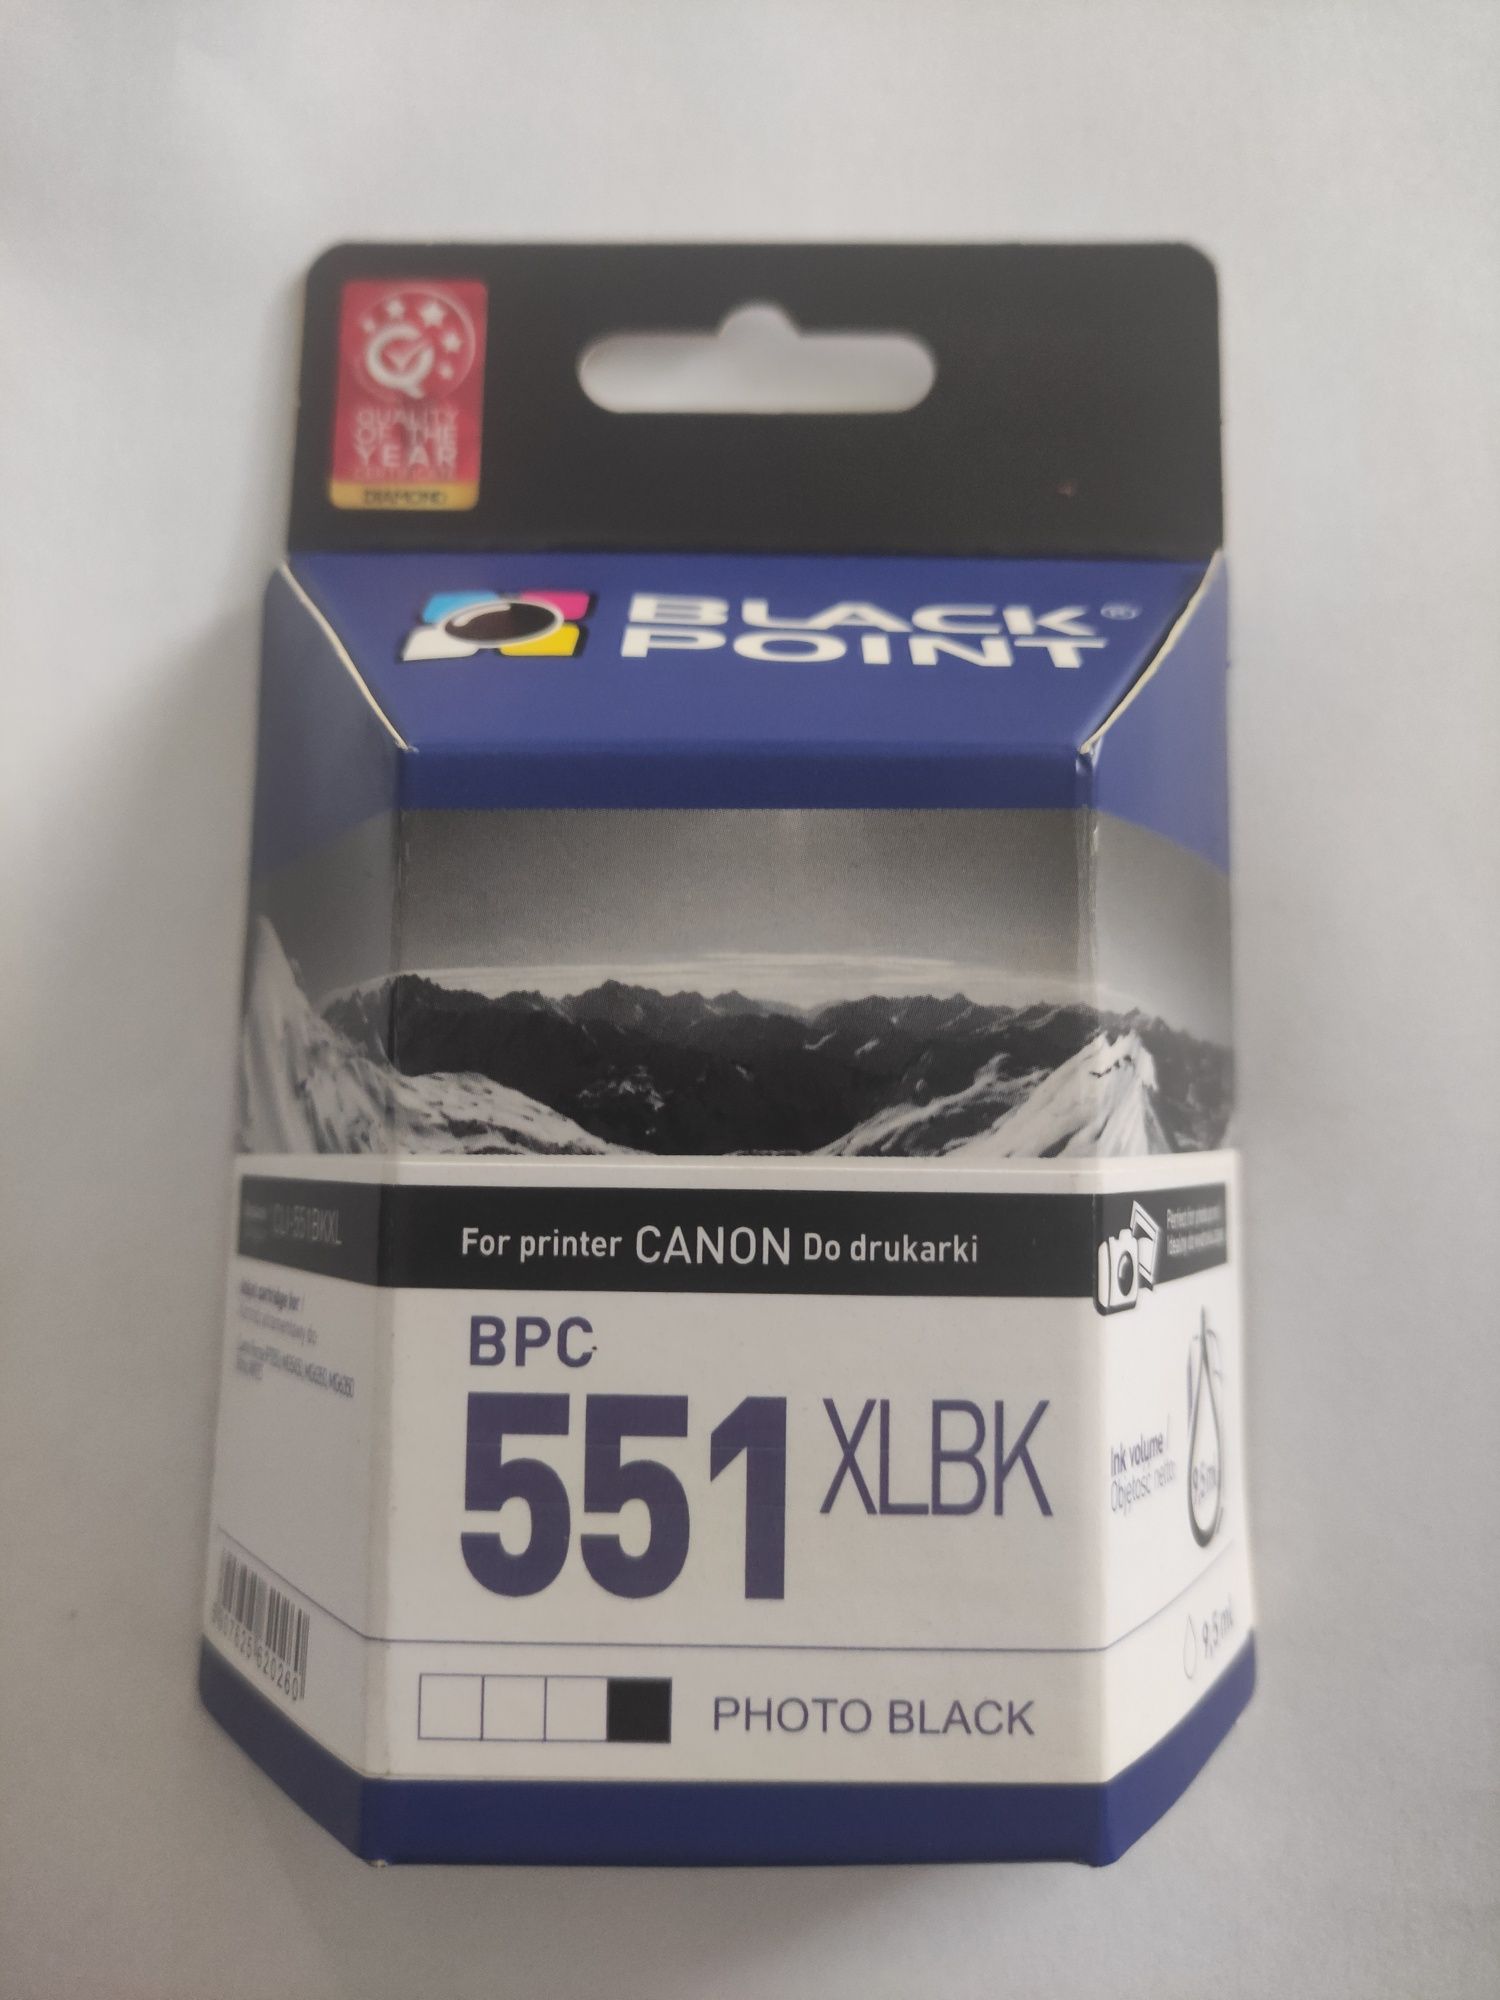 Tusz do drukarki Canon. Black Point BPC 551 XLBK